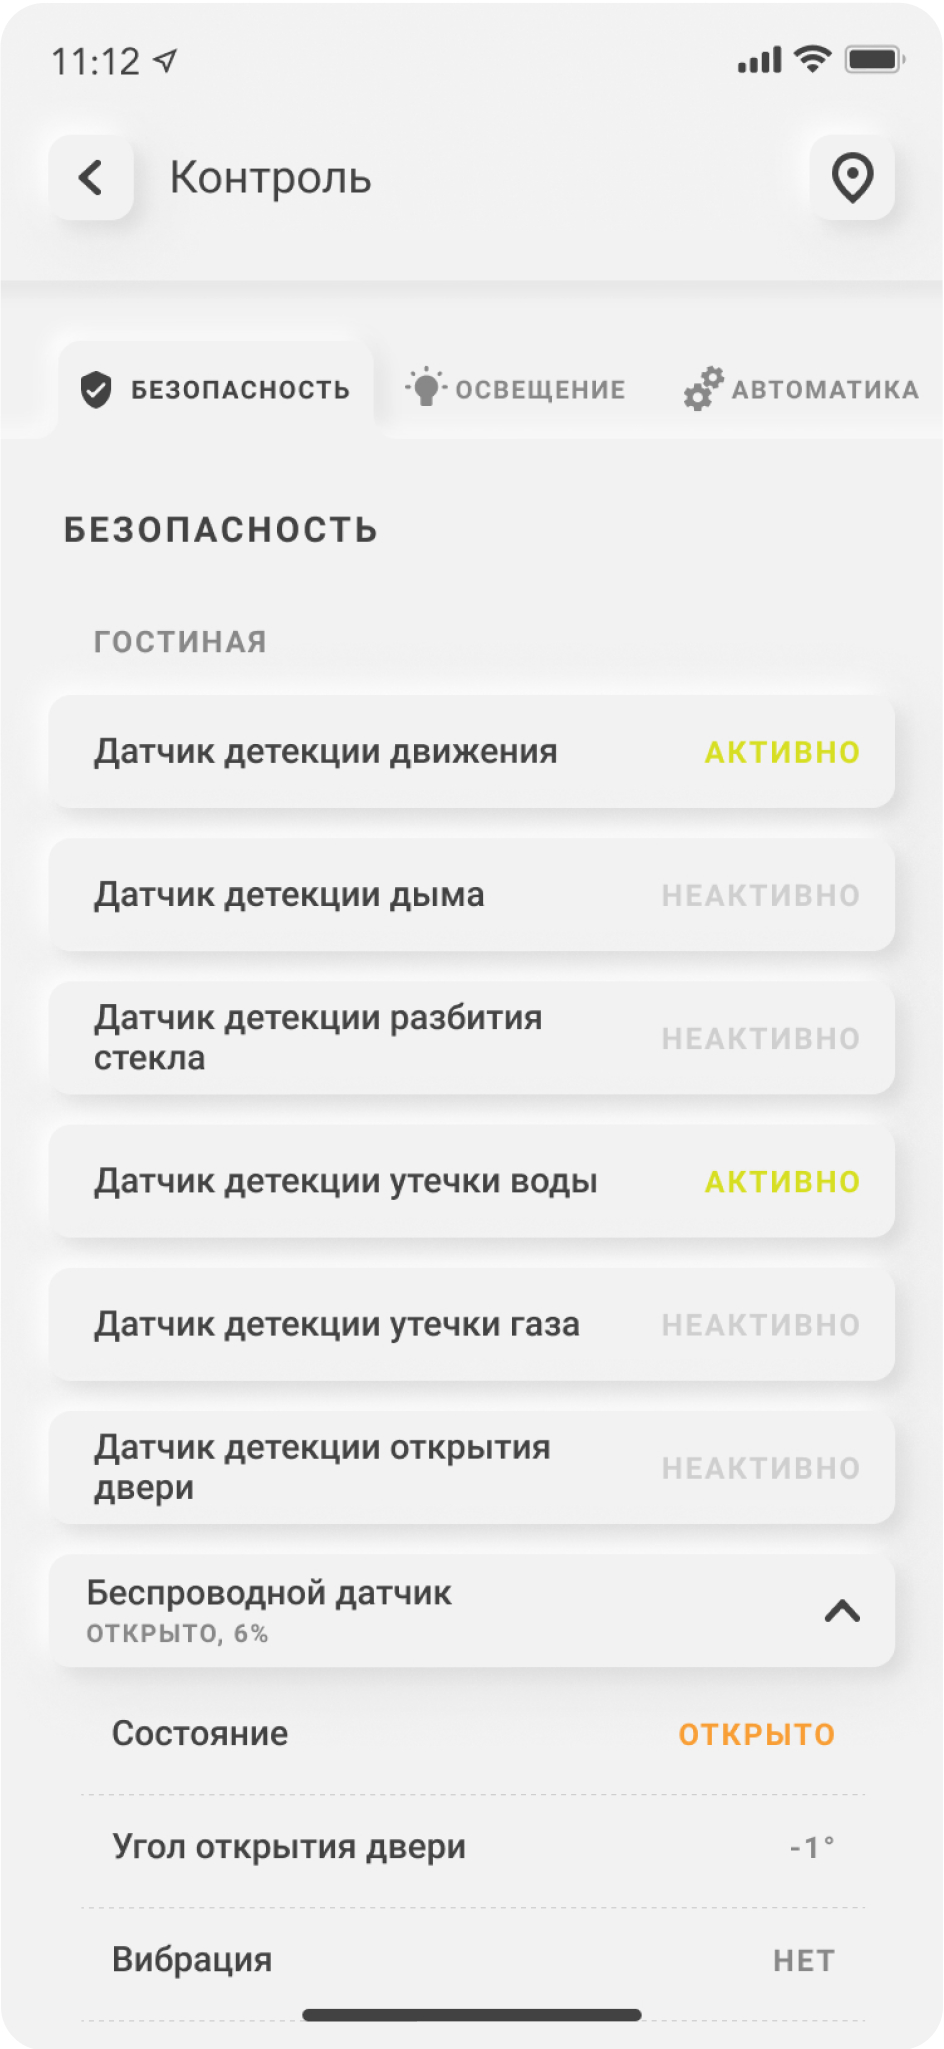 IoT Mobile App